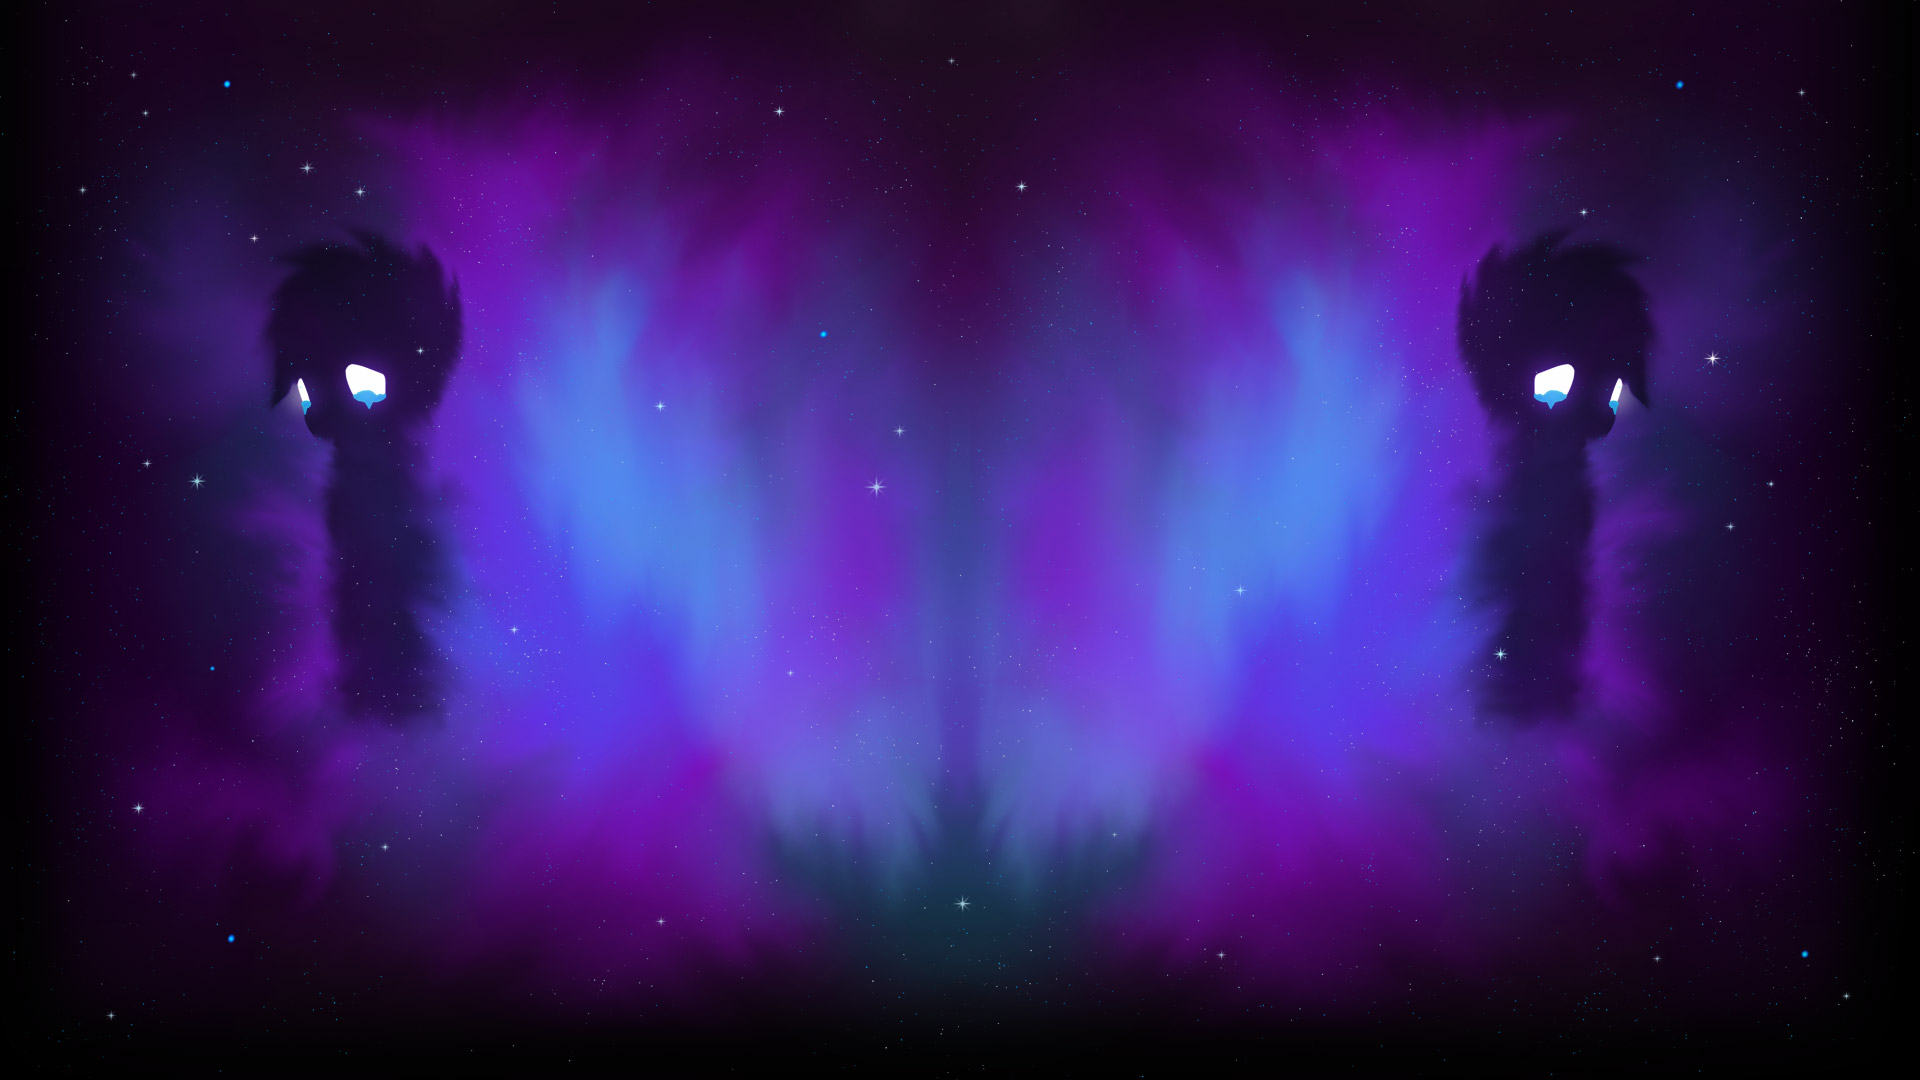 Purple Sky - Steam Artwork design [animated] by Gloxinia44 on DeviantArt